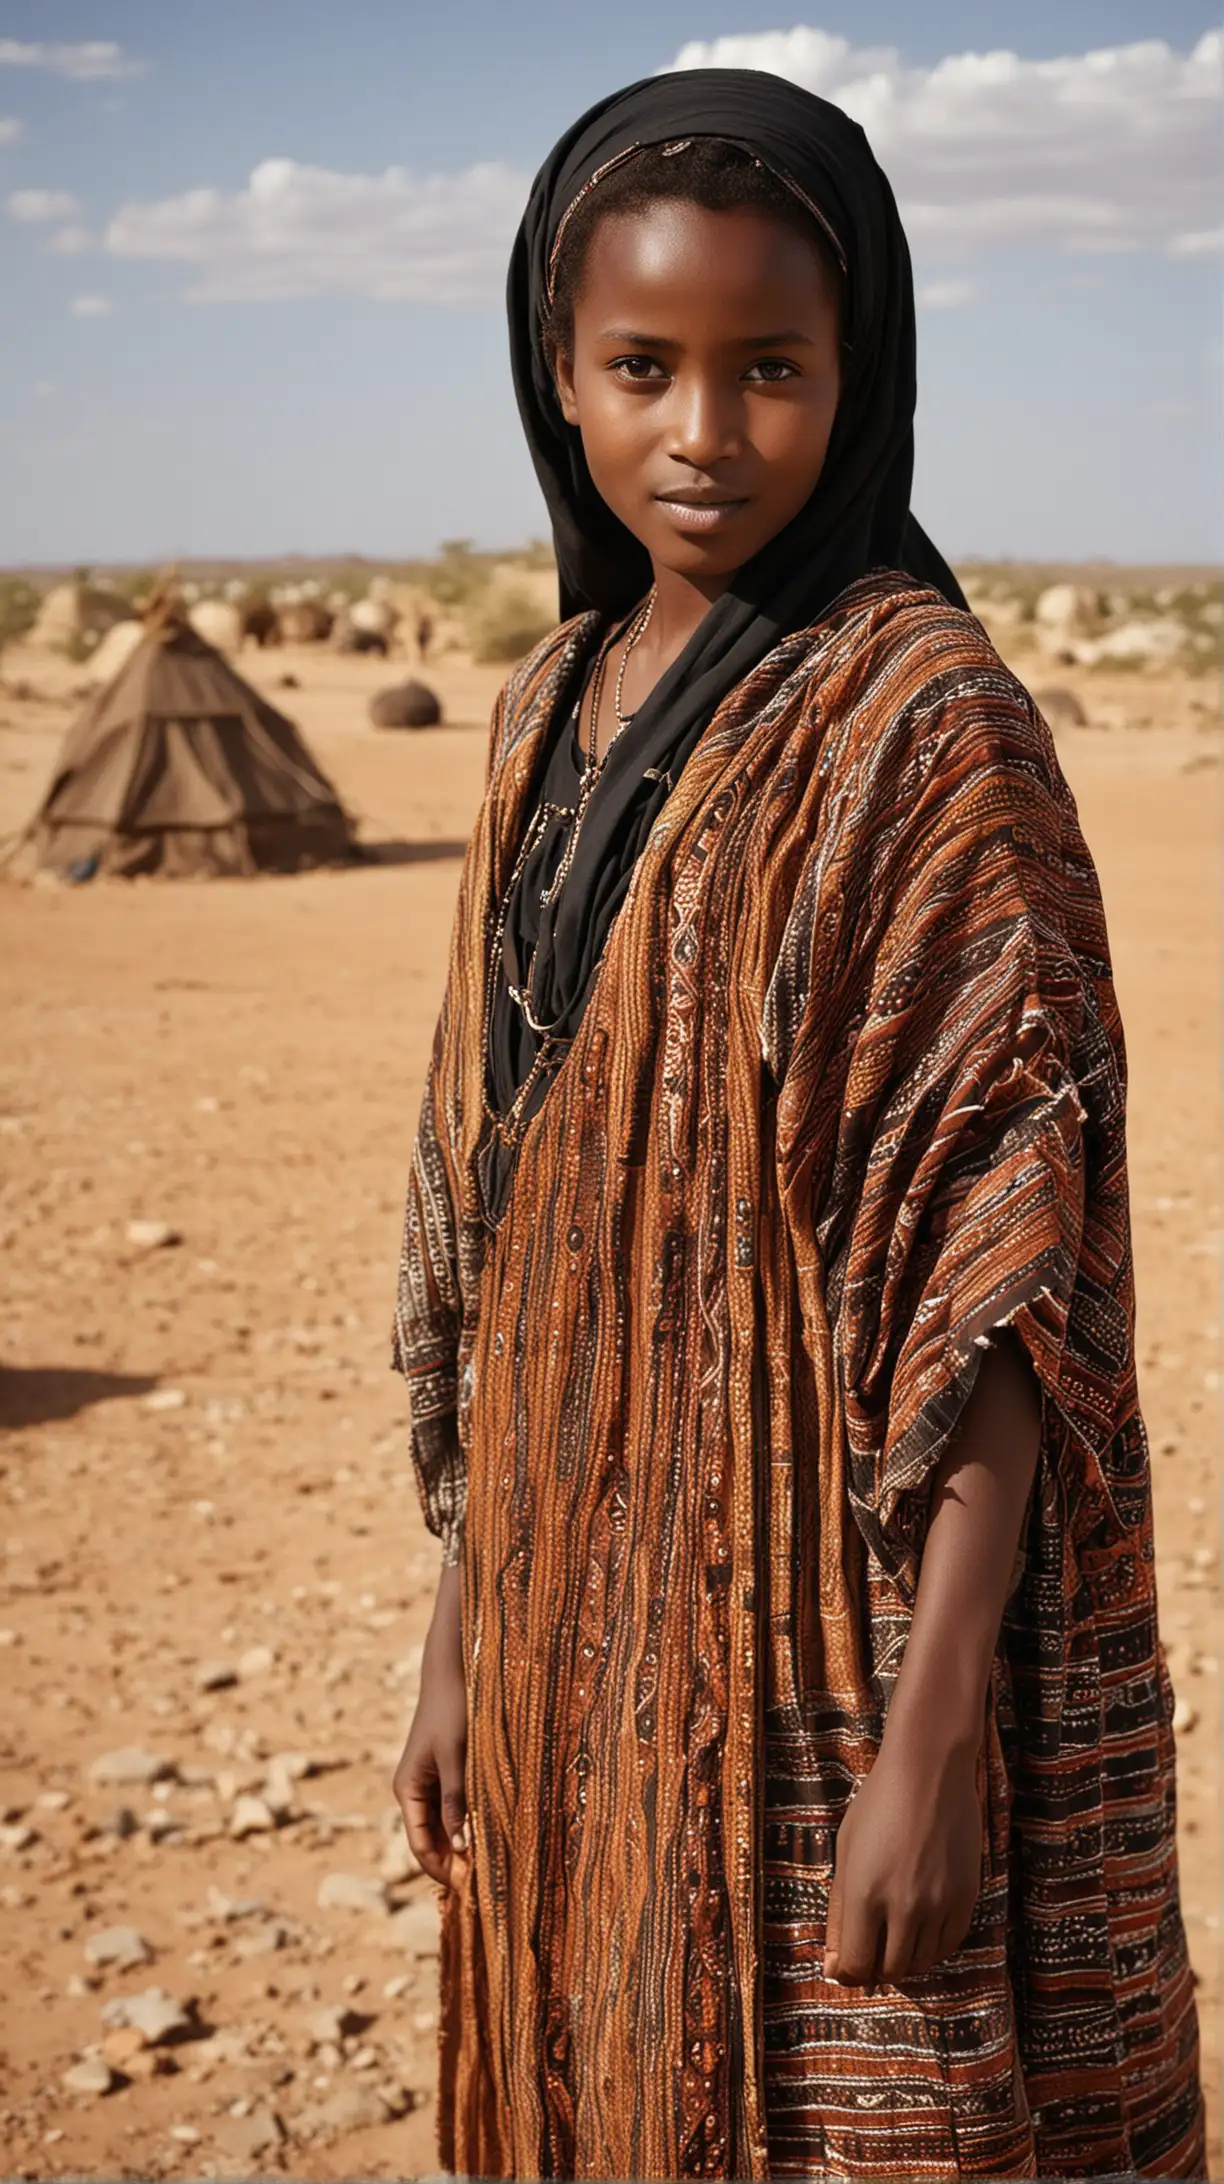 Young Waris Dirie in Traditional Somali Clothing Amidst Desert Nomadic Encampment